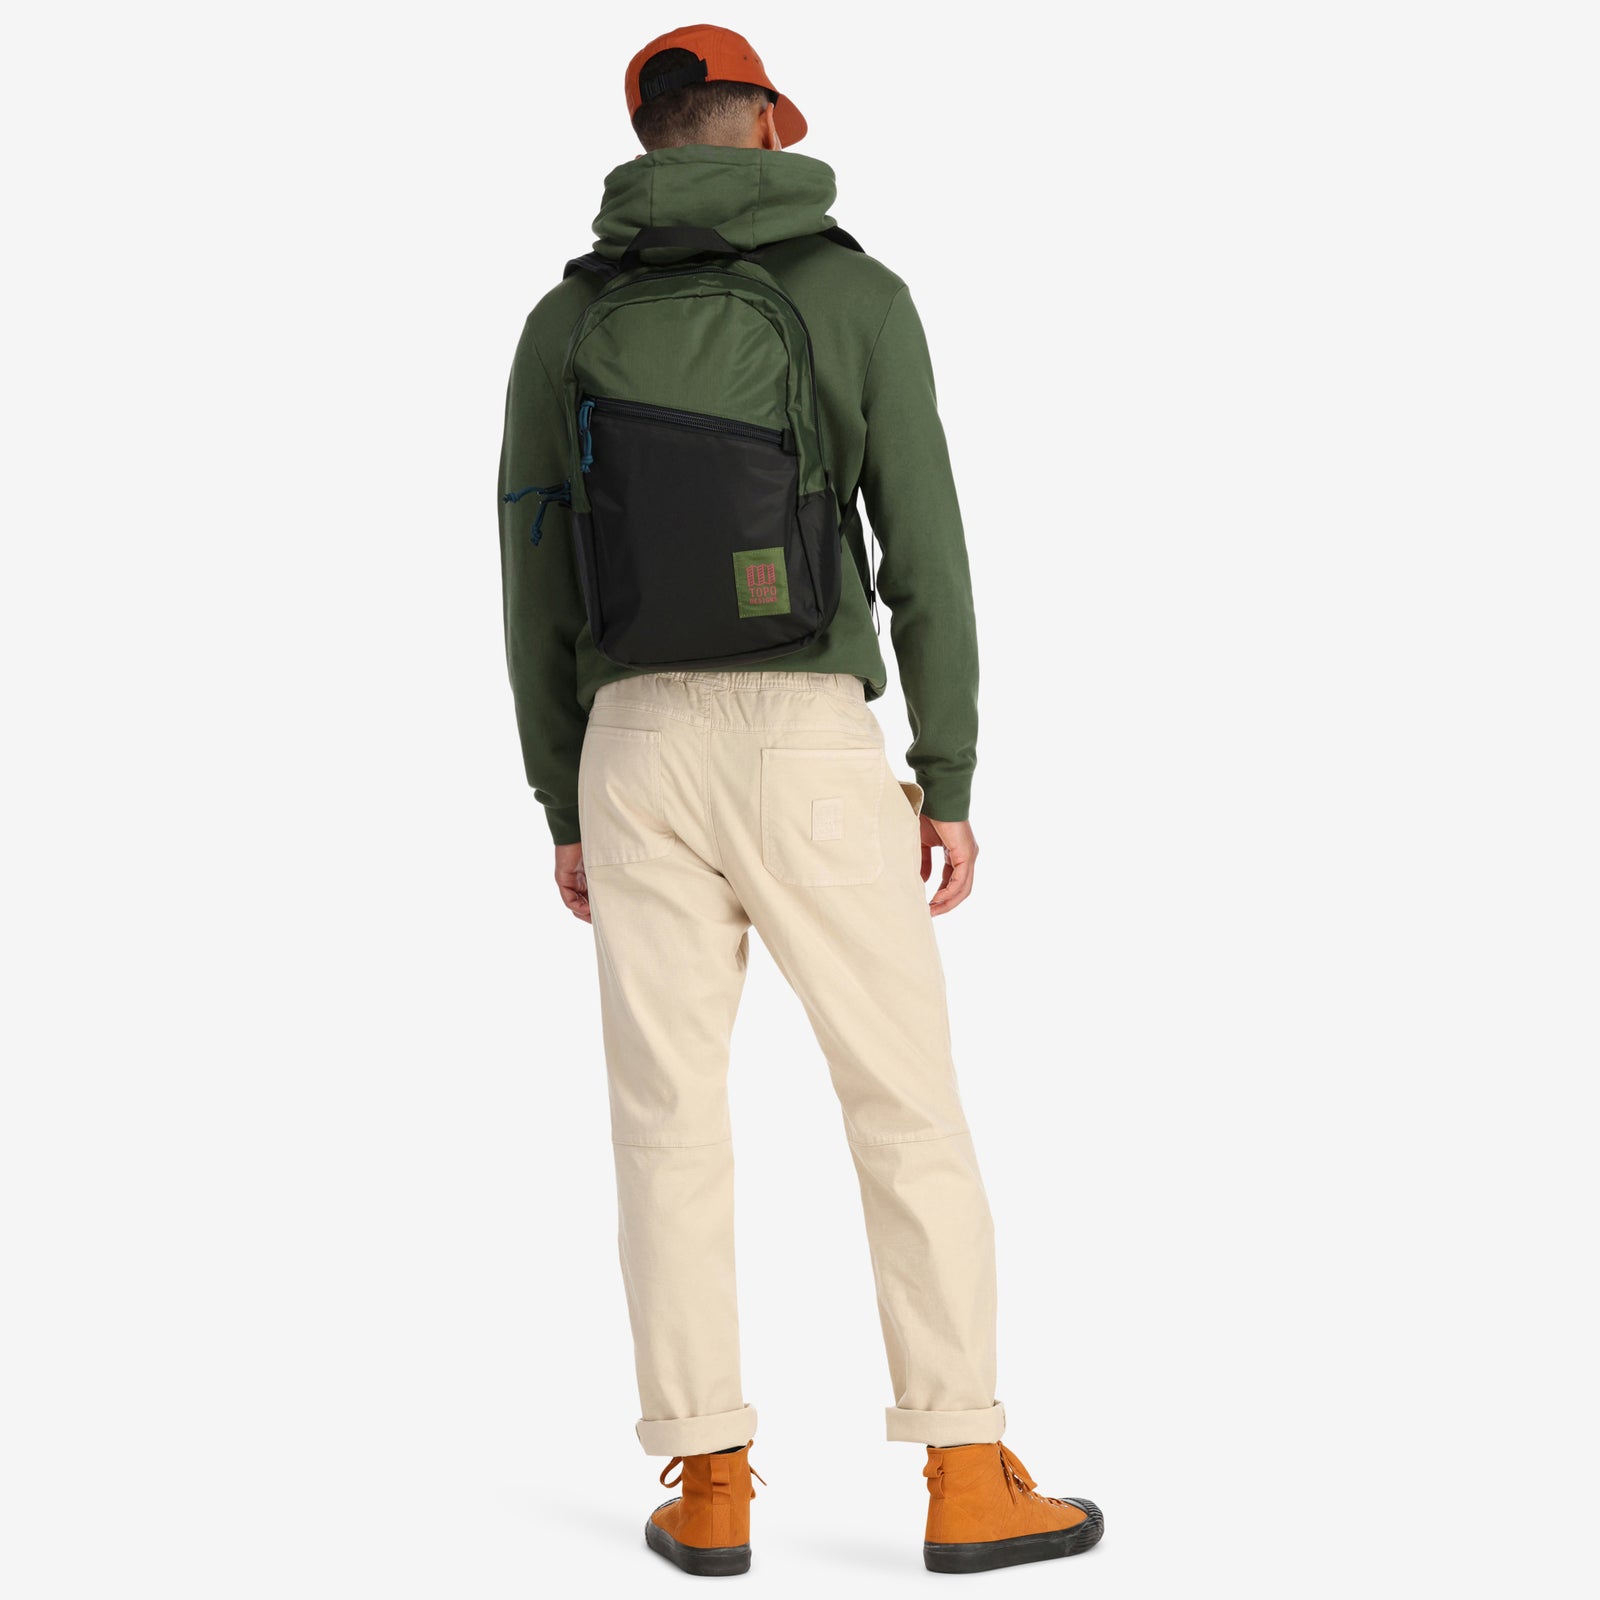 General shot of Topo Designs Light Pack laptop backpack in "black / olive" green on model shown from back.